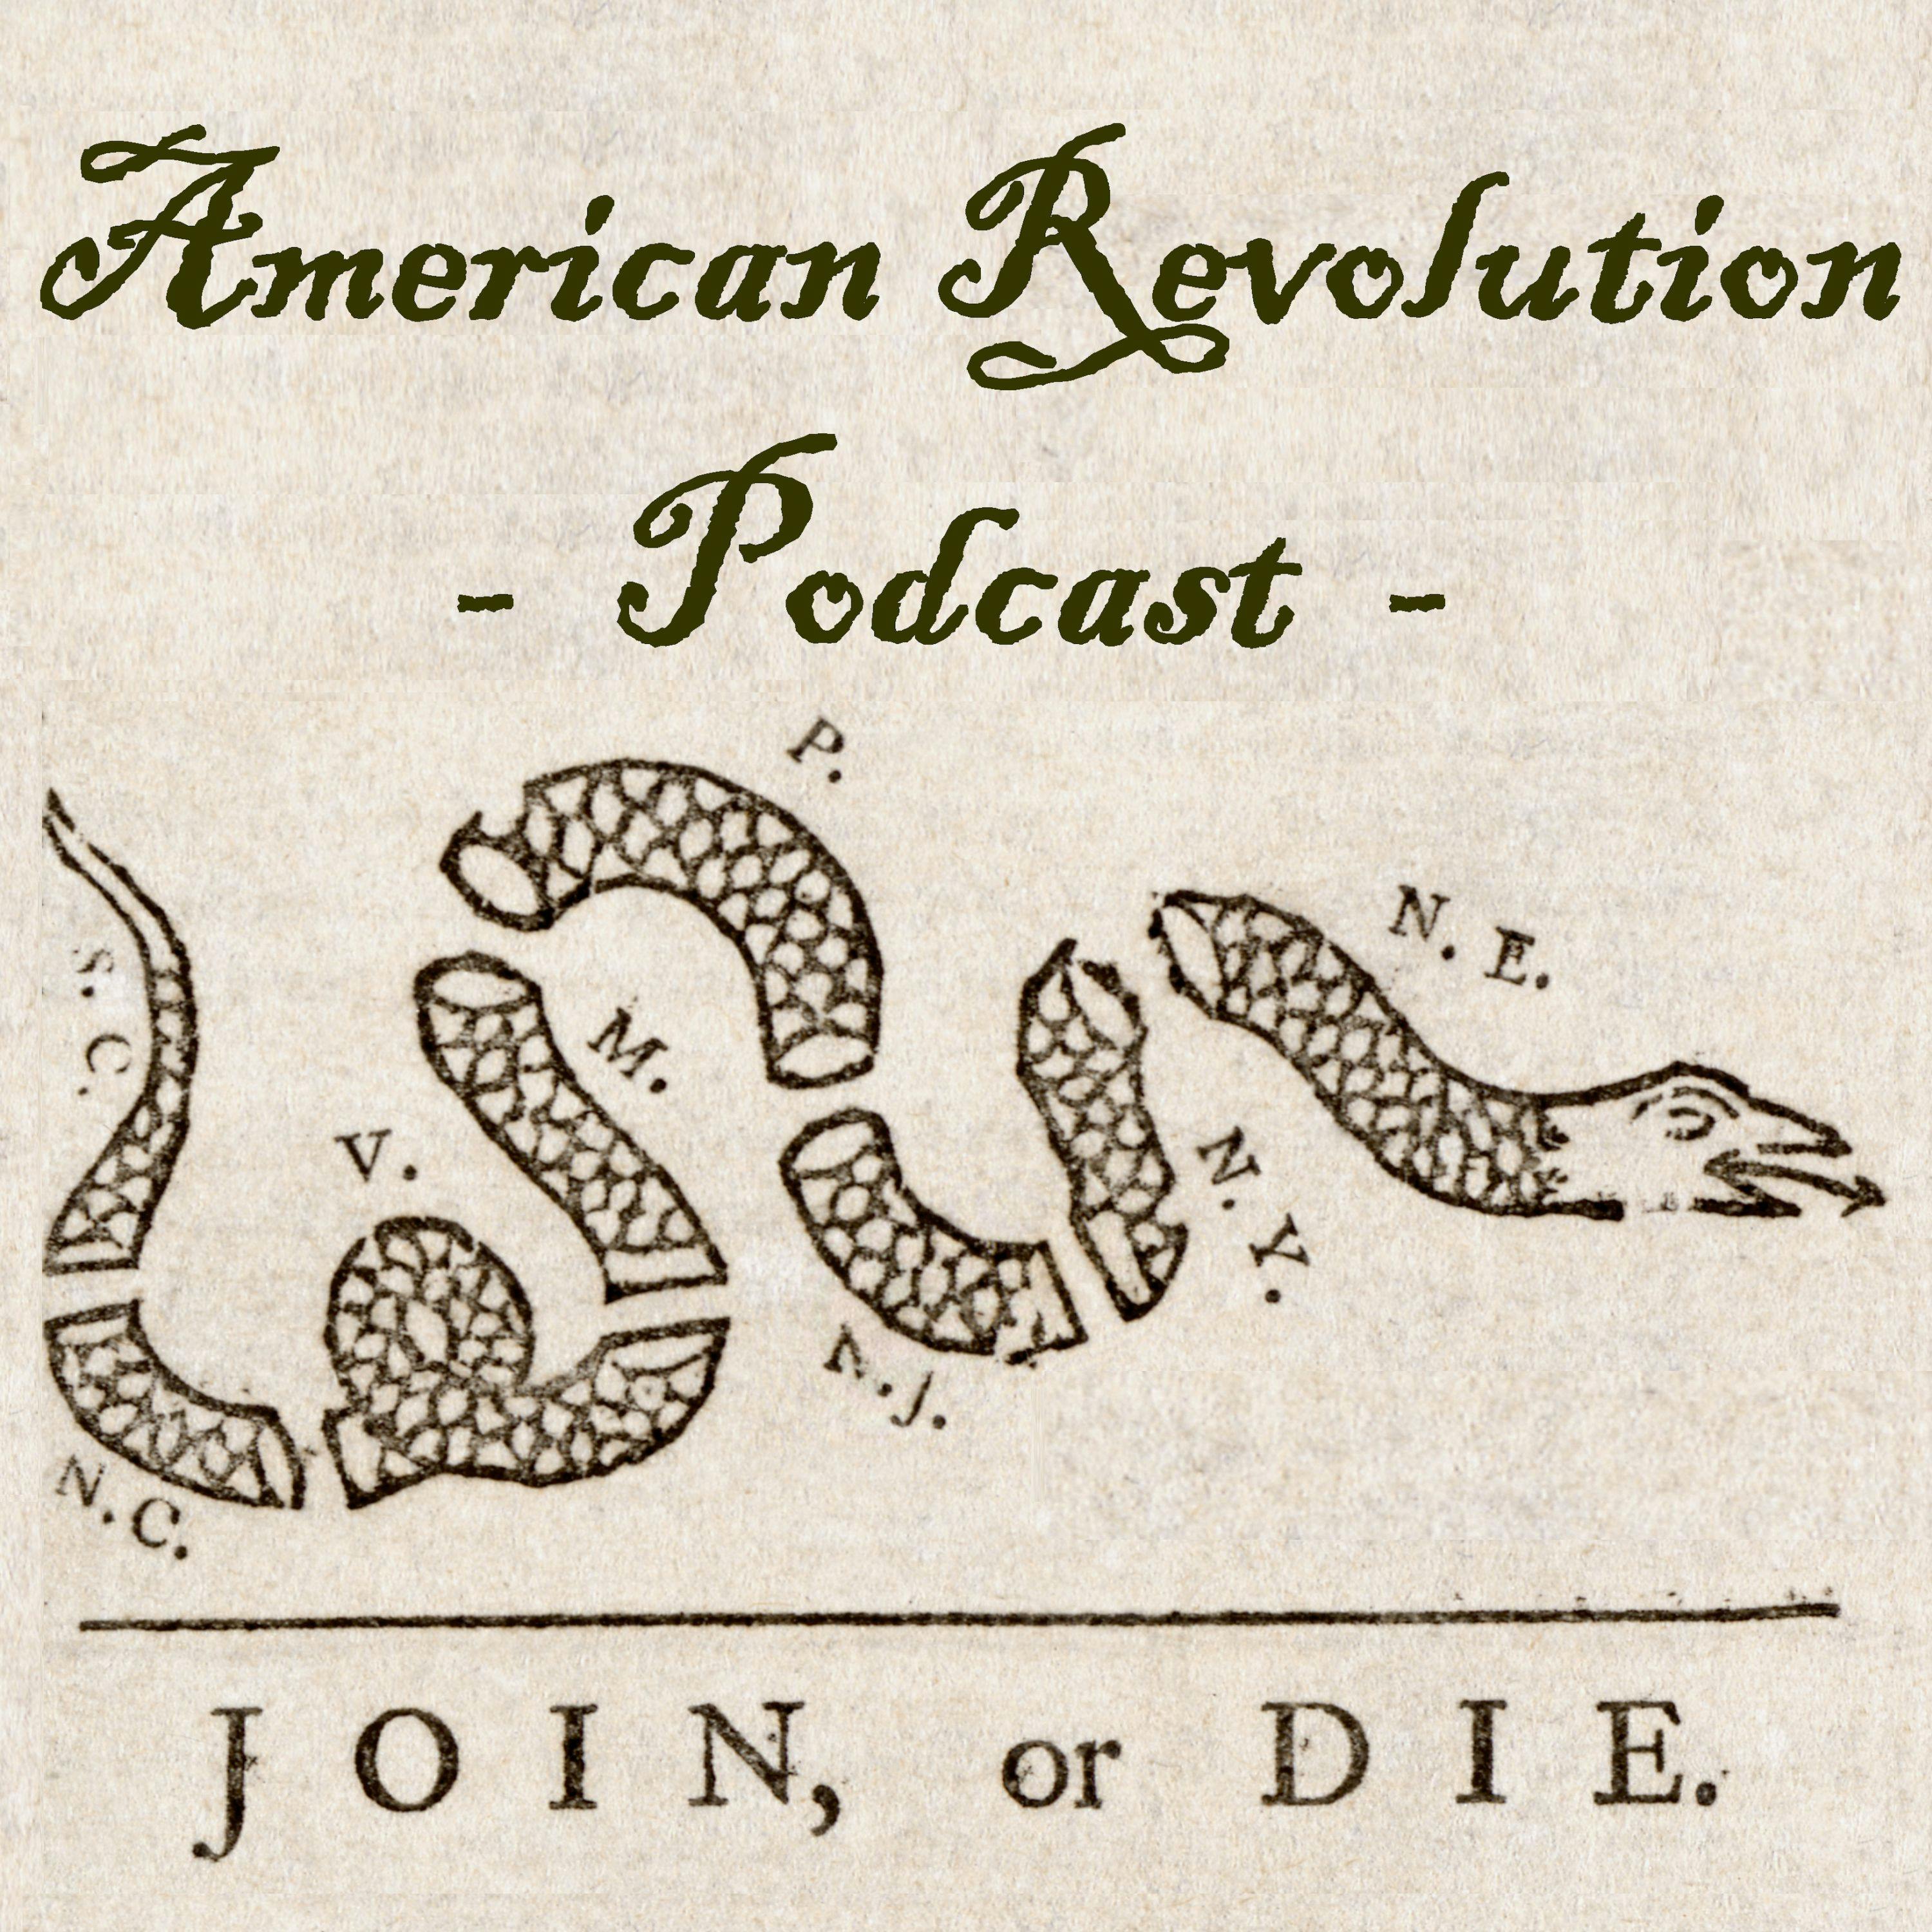 American Revolution Podcast podcast show image